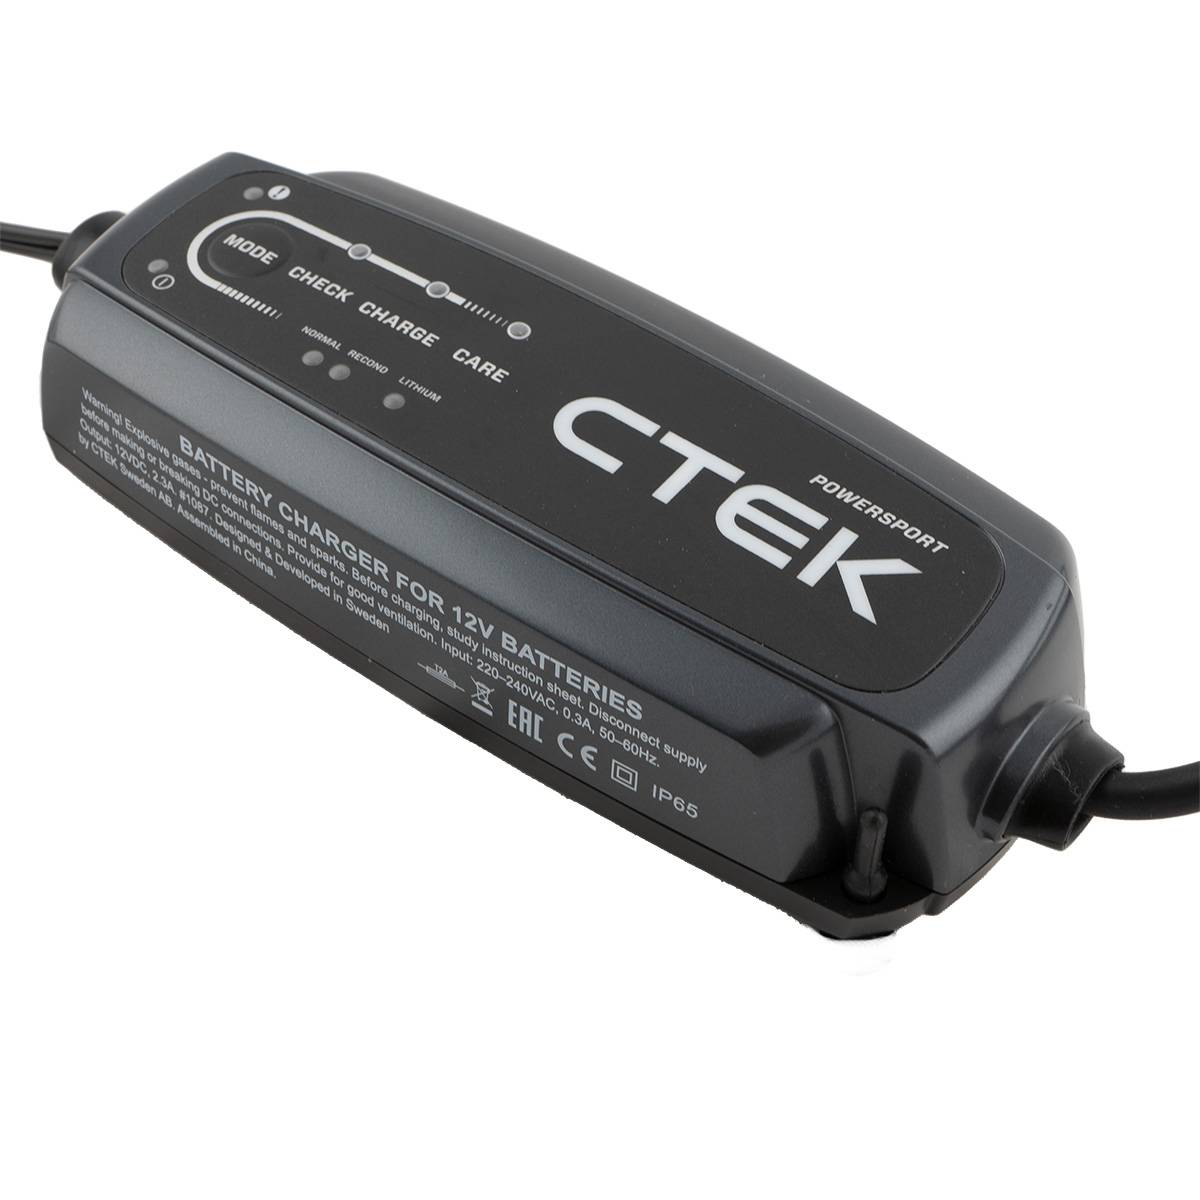 CTEK CT5 POWERSPORT EU Batterie Ladegerät 12V für Blei-und Litihuim Akkus